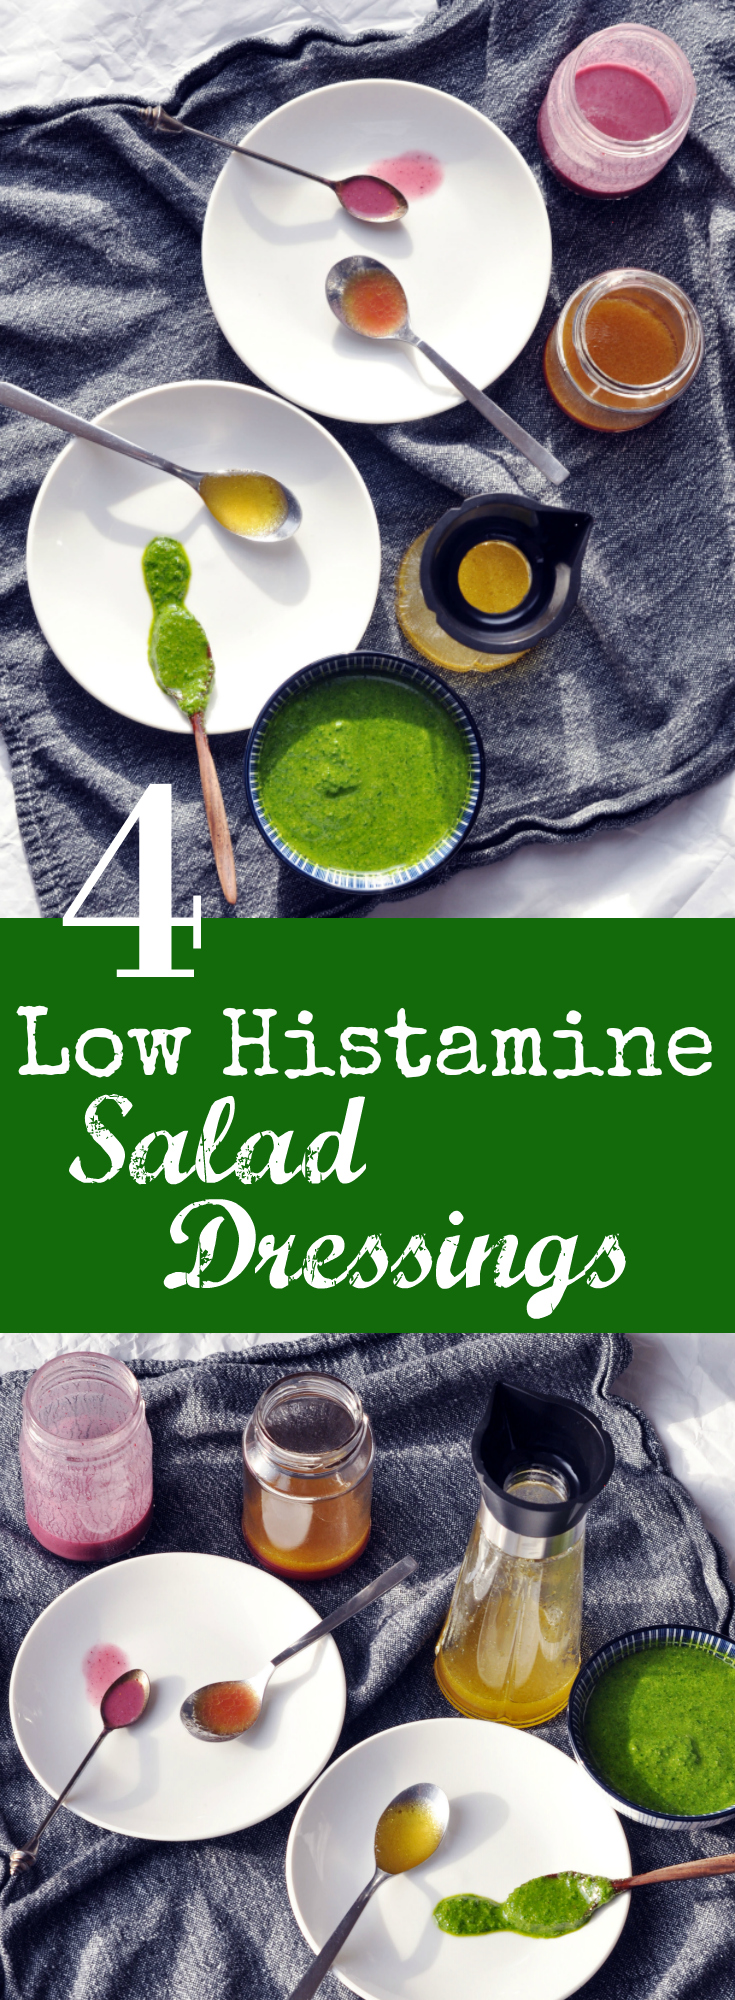 4 Low Histamine Salad Dressings